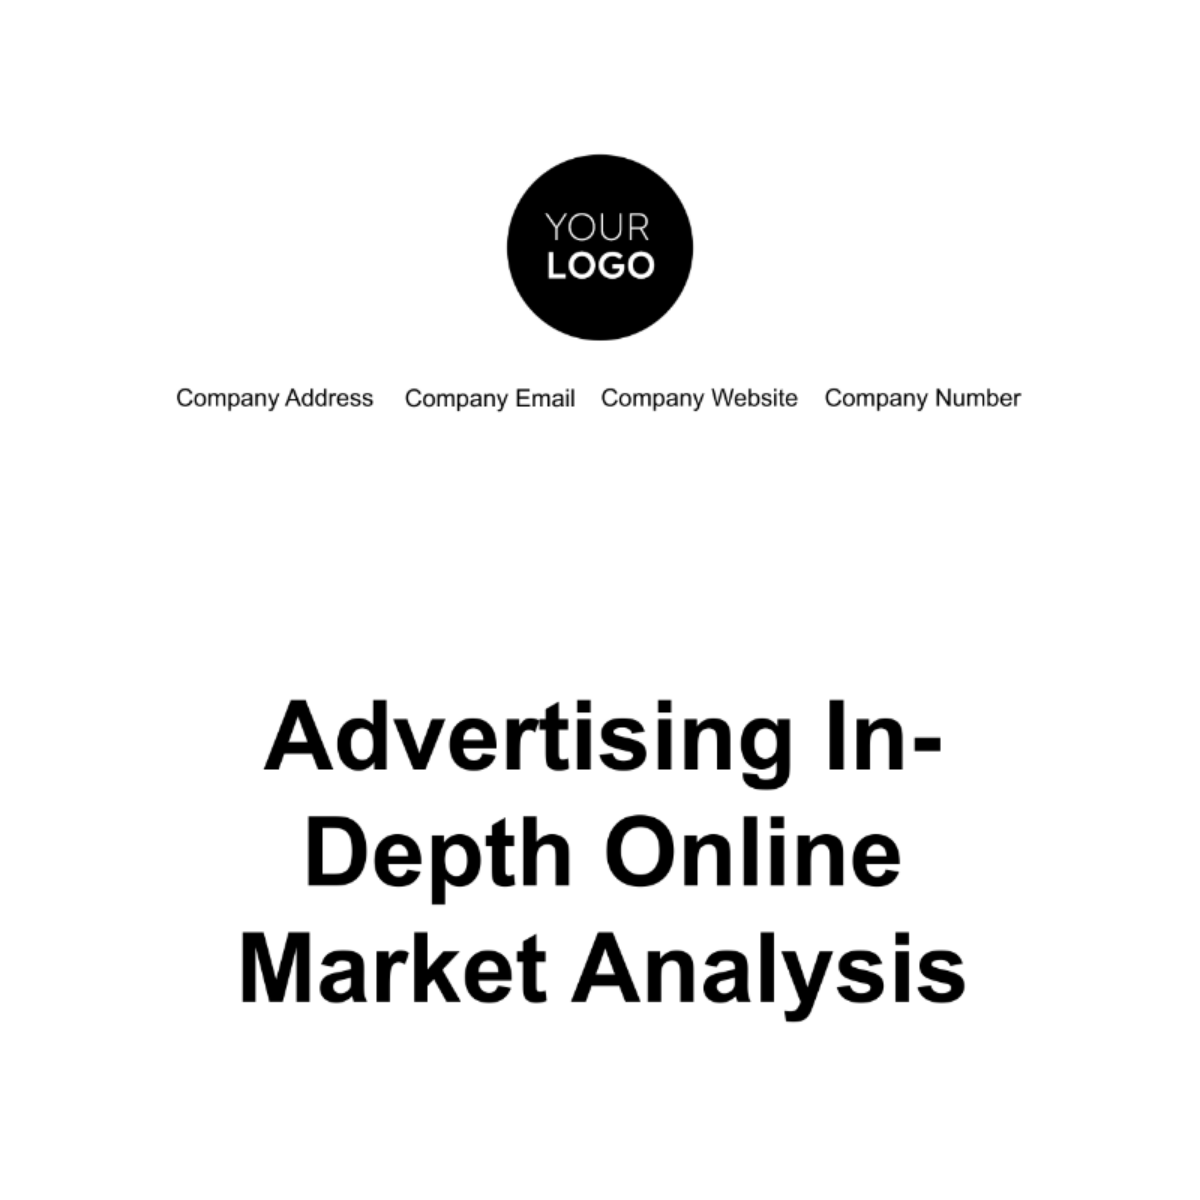 Free Advertising In-depth Online Market Analysis Template